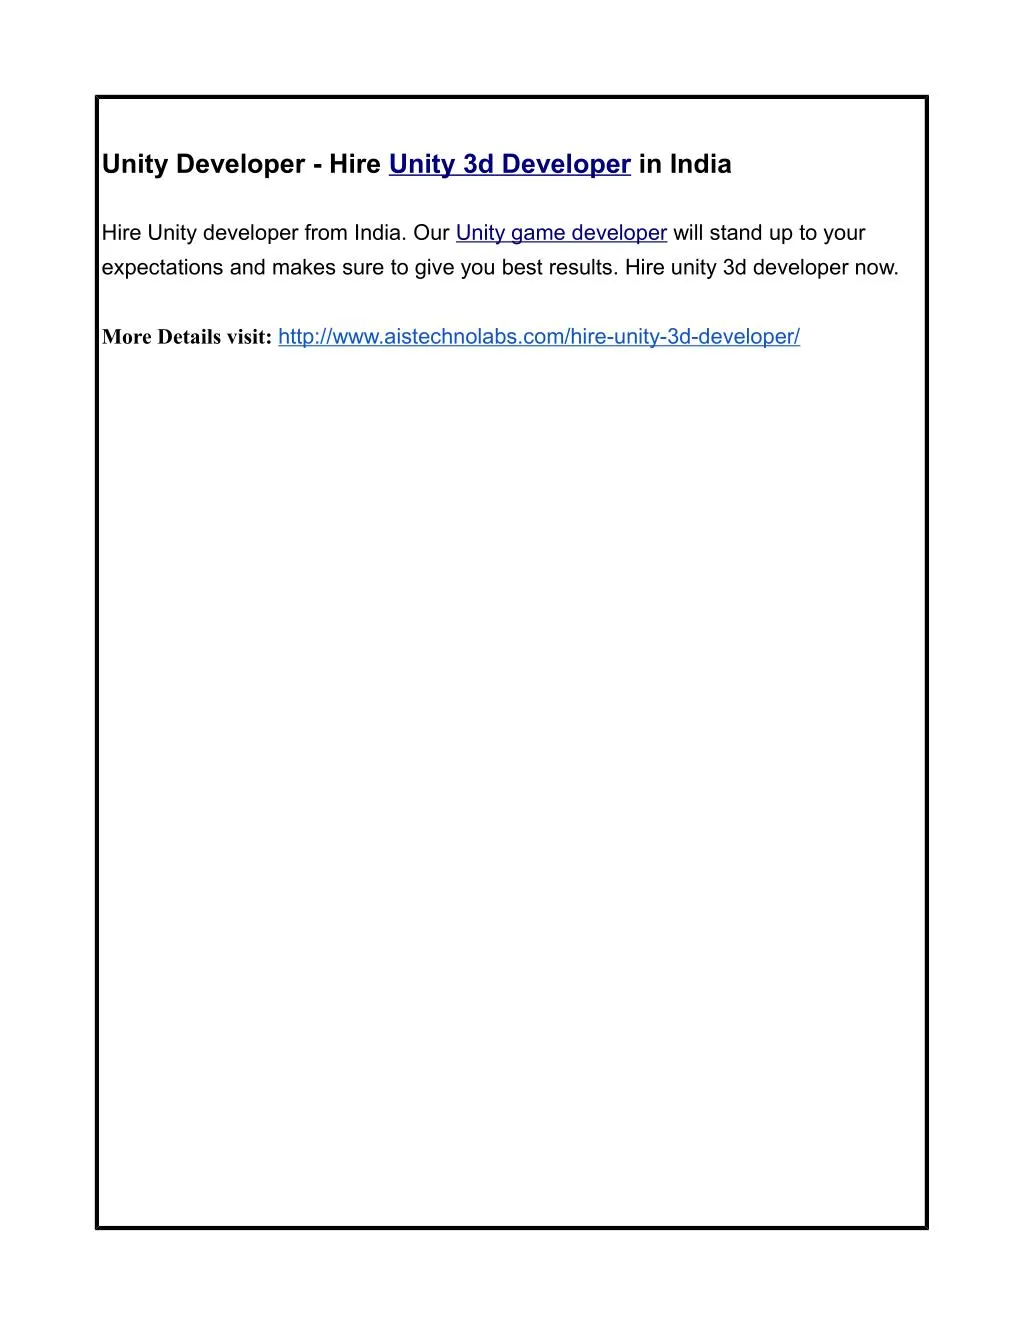 unity developer hire unity 3d developer in india